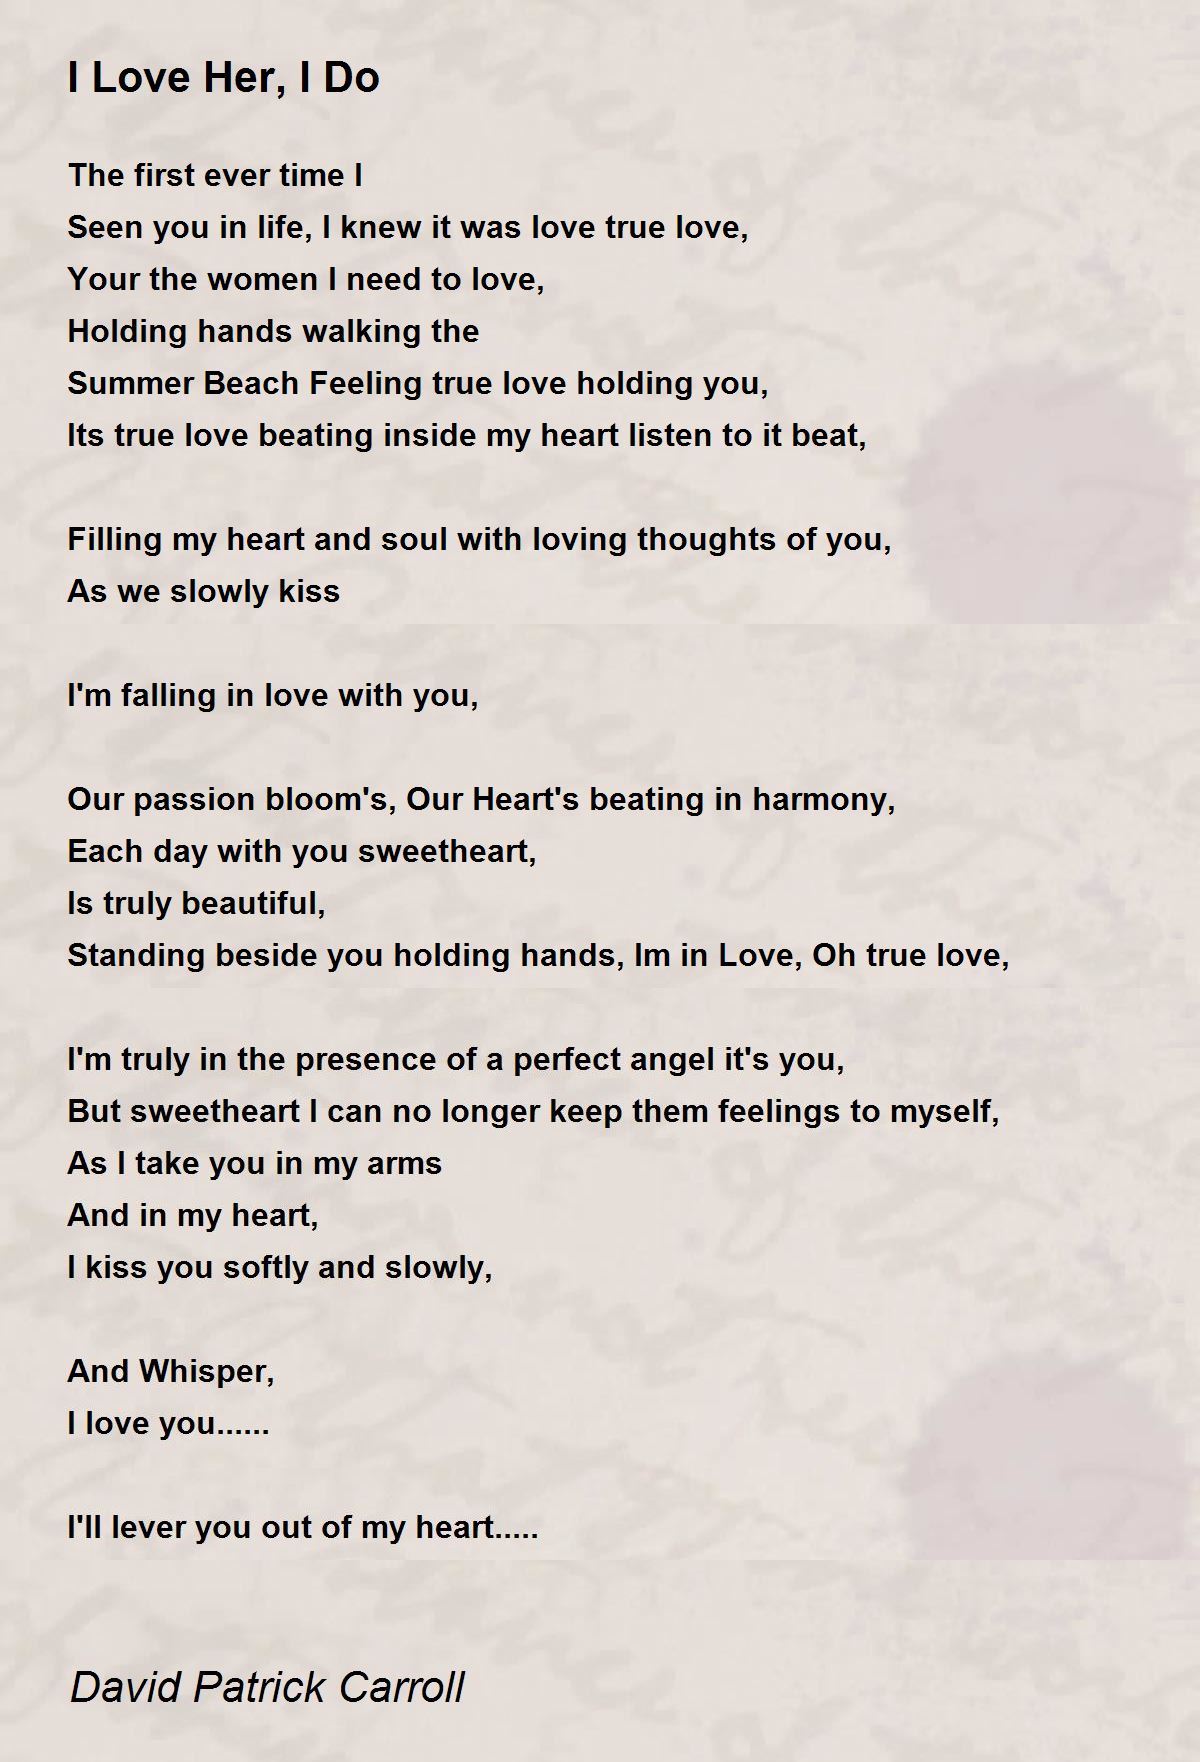 I Love Her, I Do by David P Carroll - I Love Her, I Do Poem